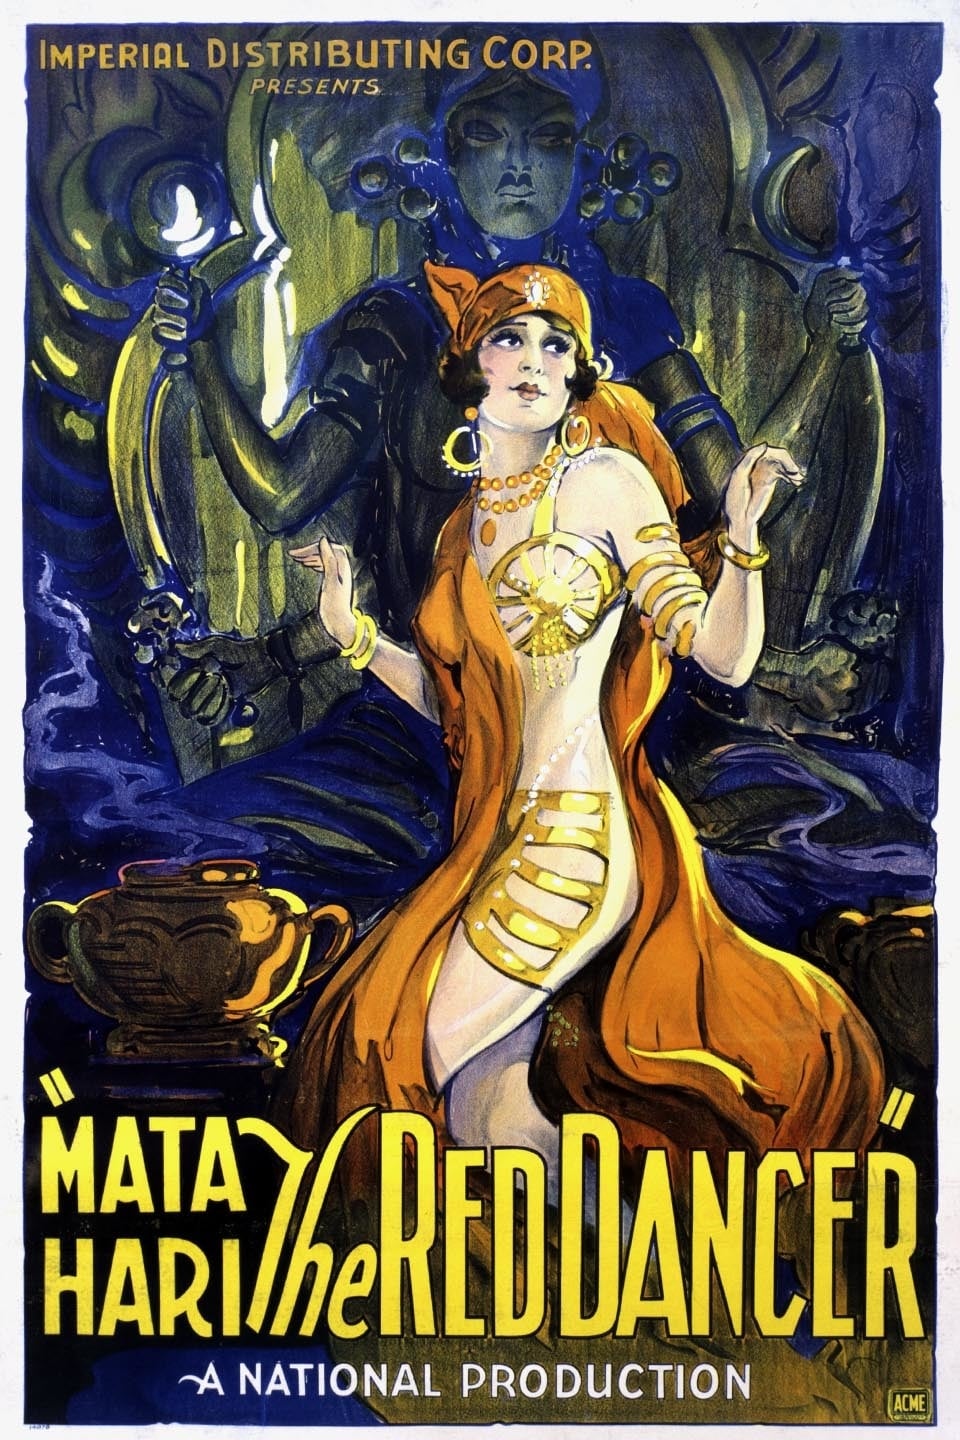 Mata Hari: the Red Dancer